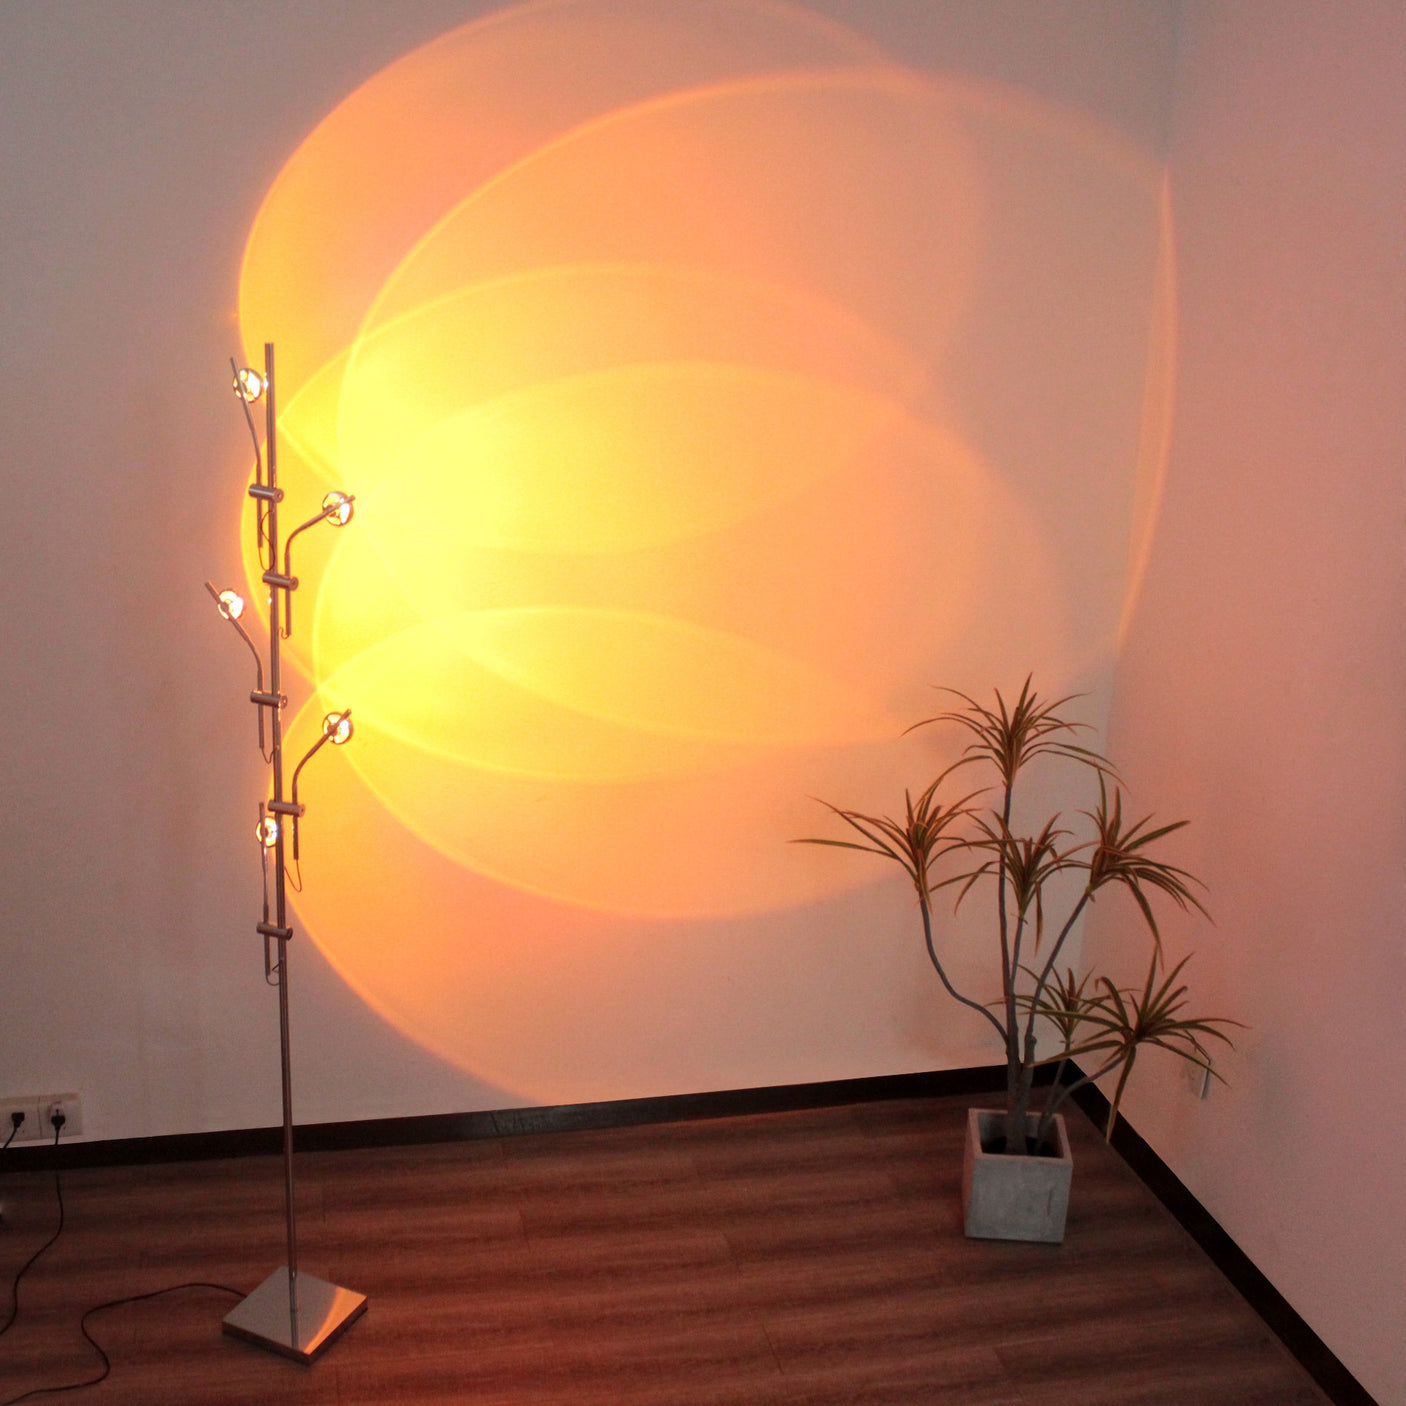 5-Head Projector Floor Lamp, Home Office Decor